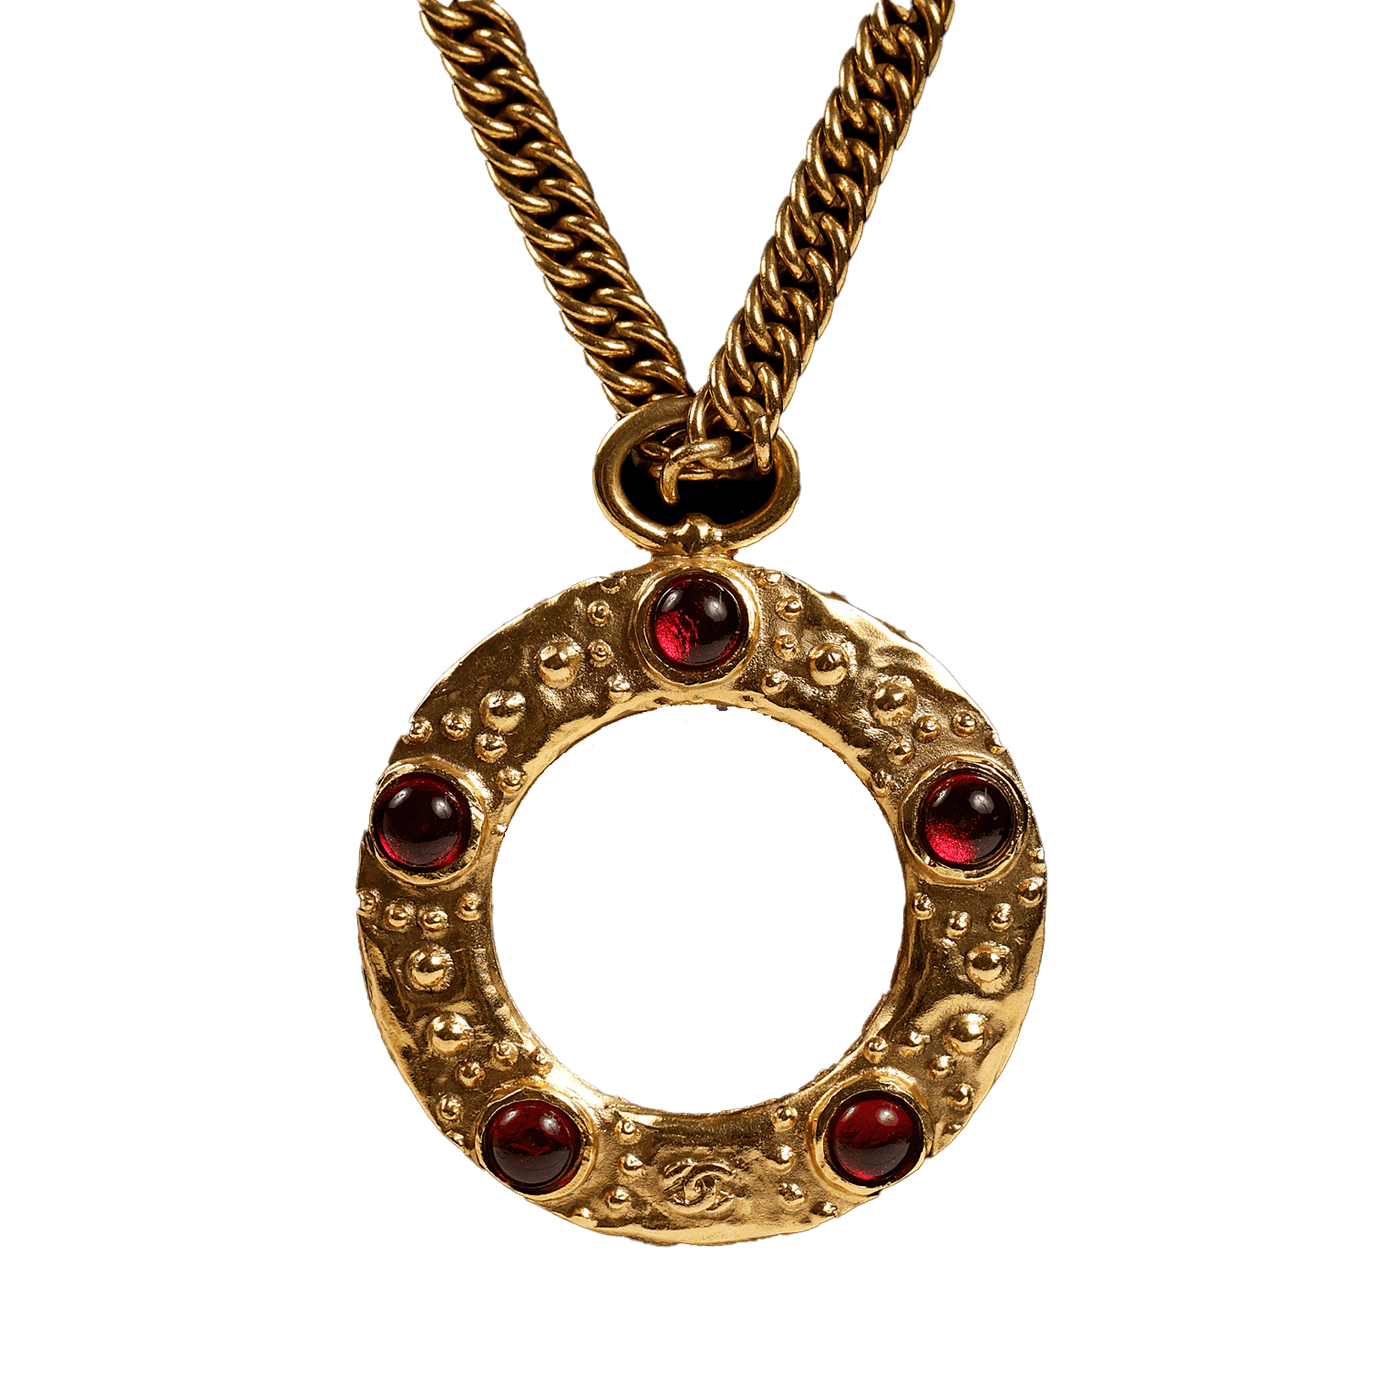 Chanel Red Gripoix Magnifier Monocle Necklace - Only Authentics